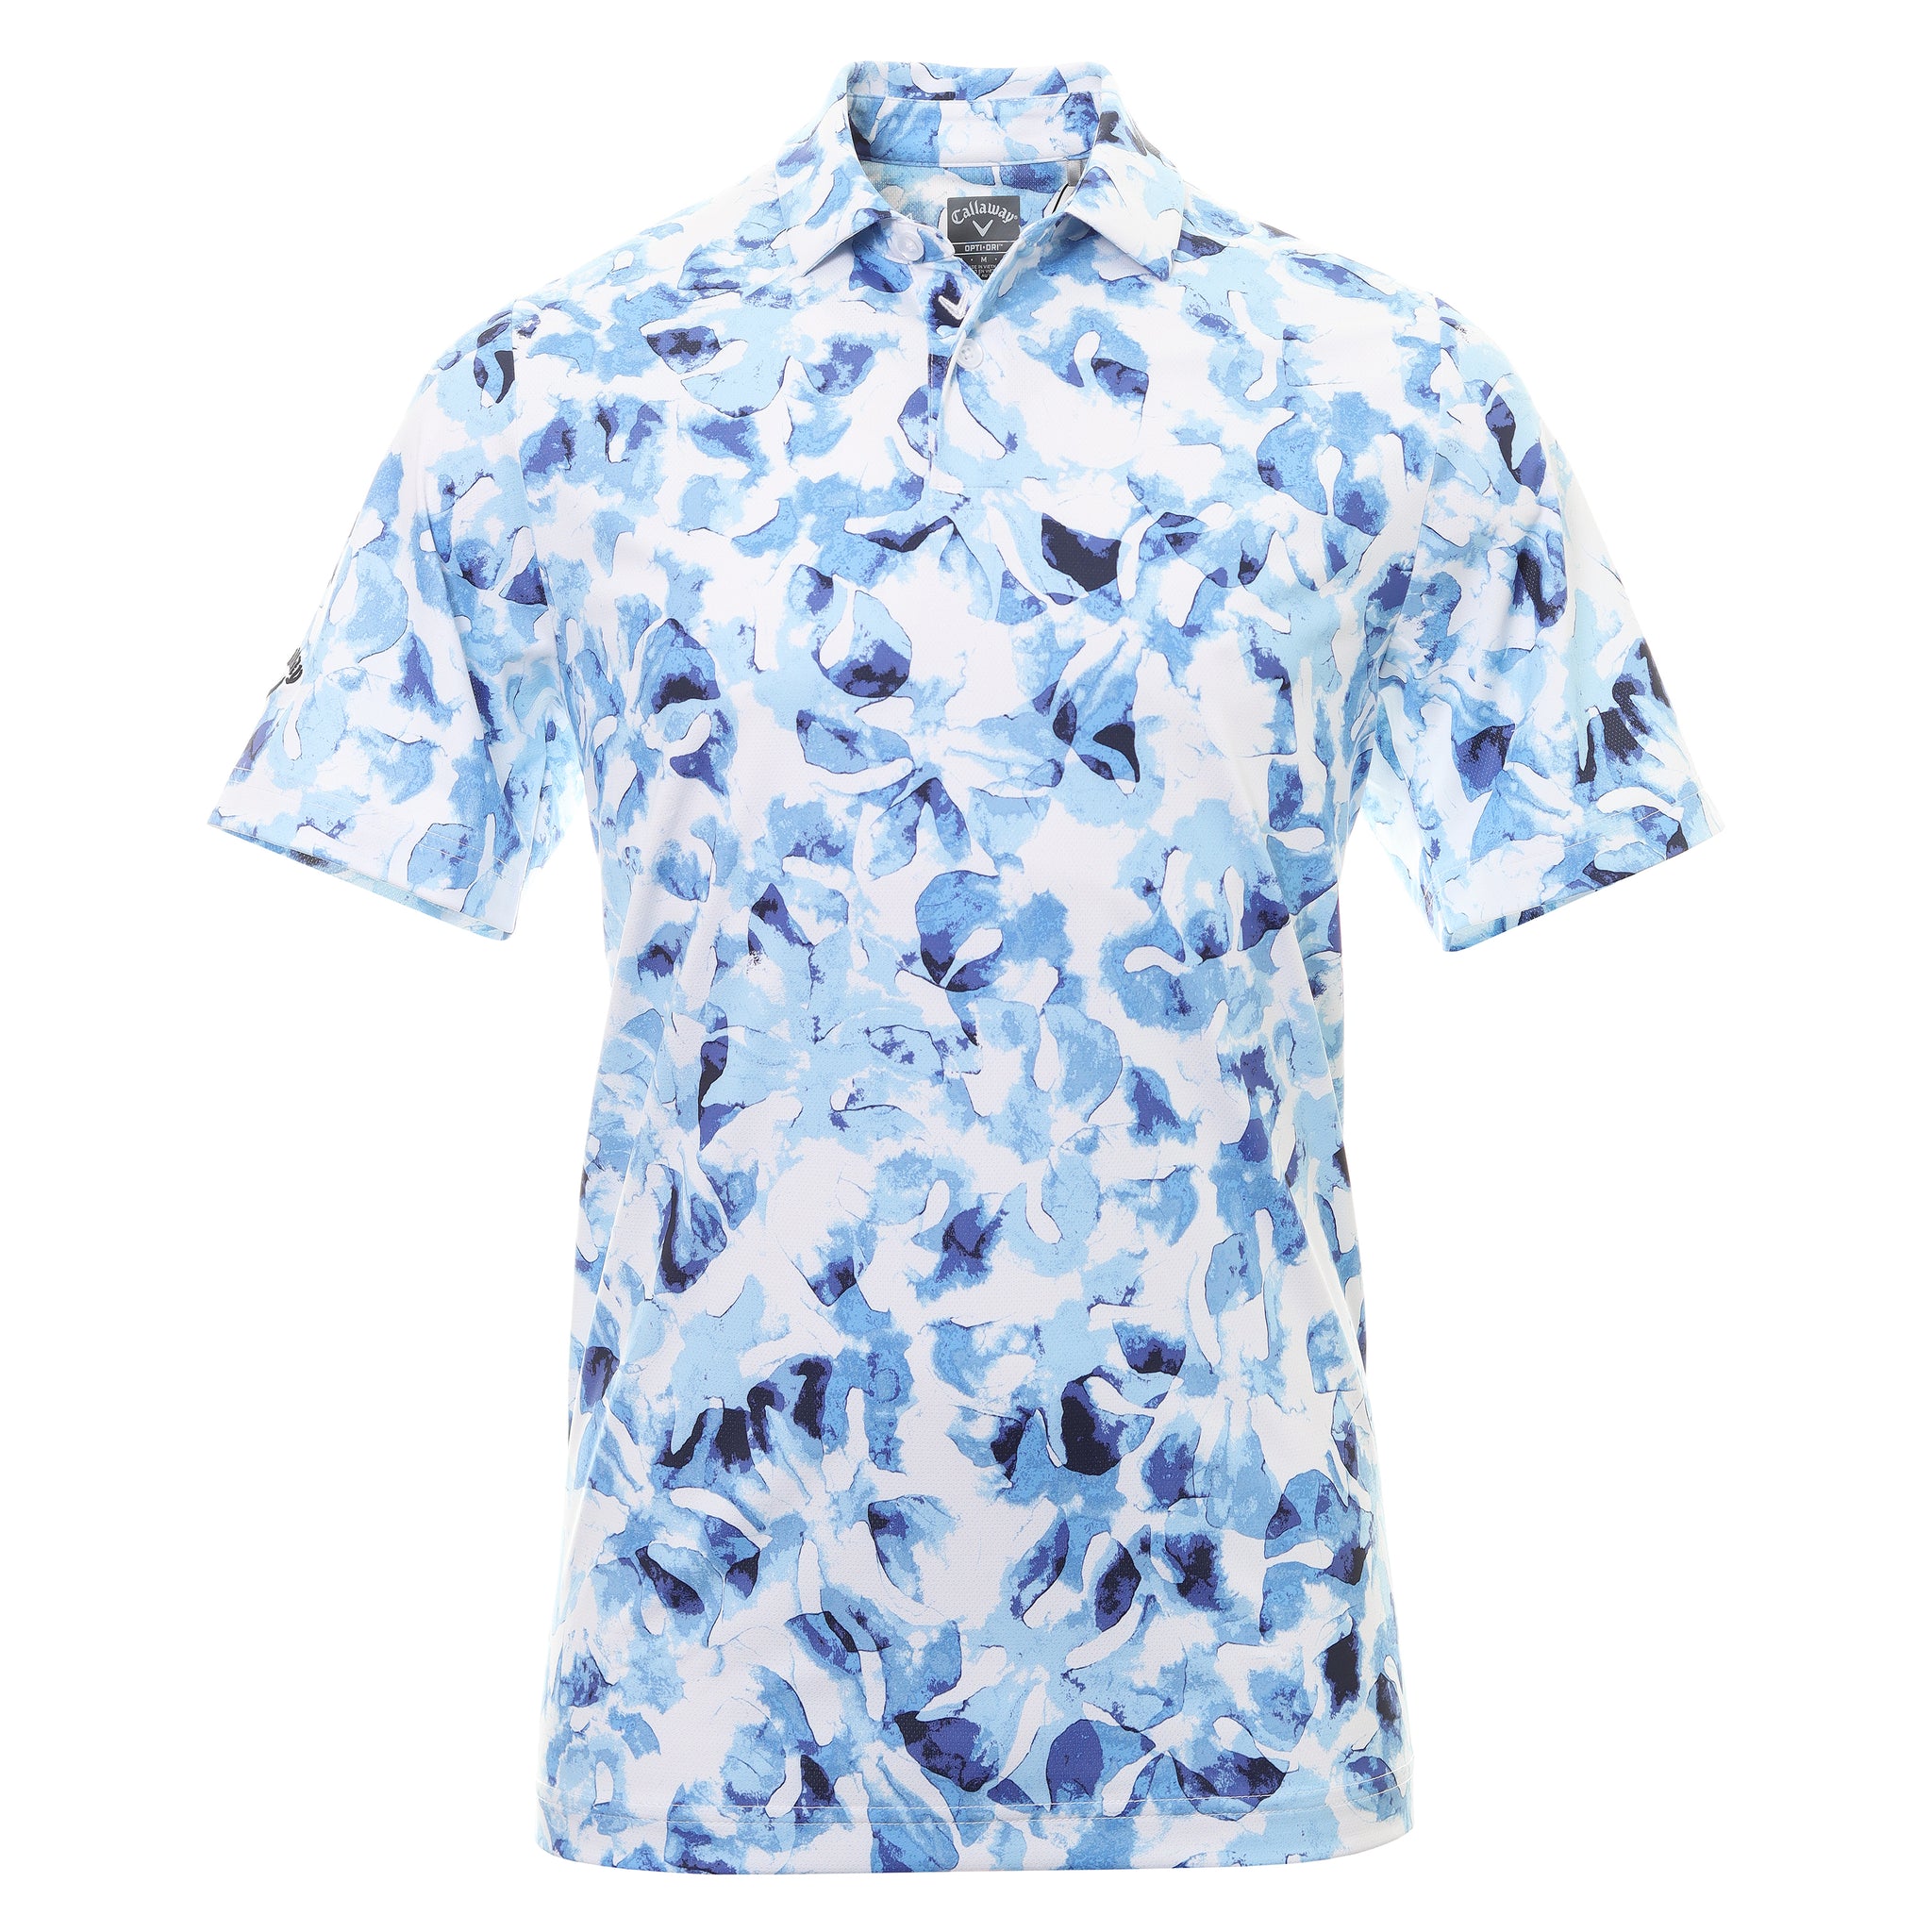 callaway-golf-tye-dye-leaf-print-shirt-cgksc0c0-bright-white-100